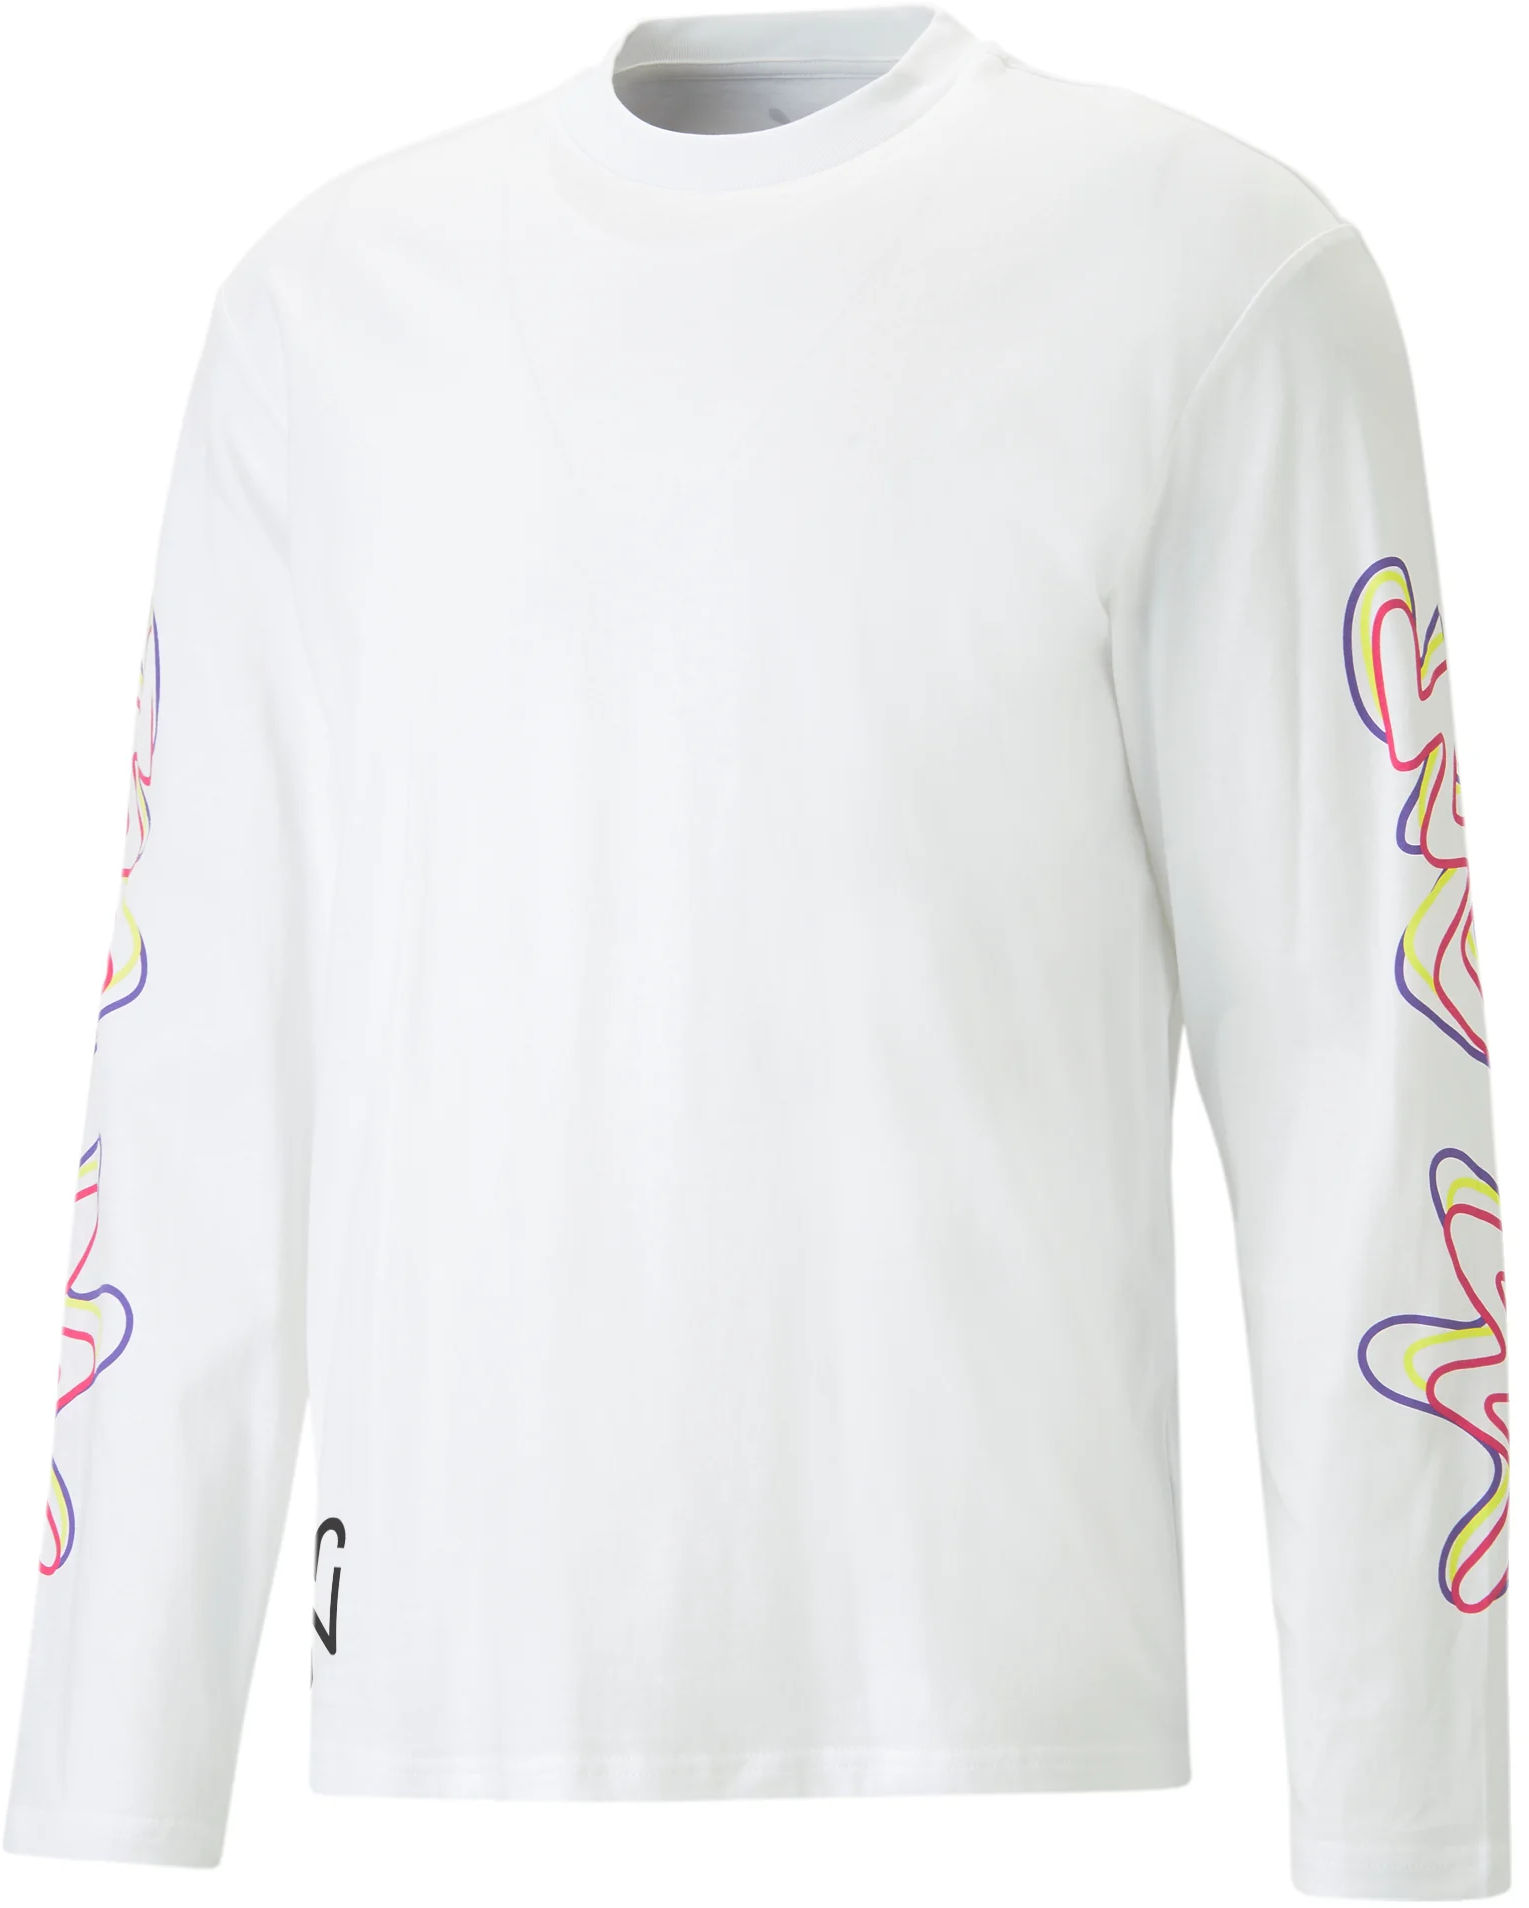 Koszula z długim rękawem Puma Neymar JR Creativity Longsleeve Shirt